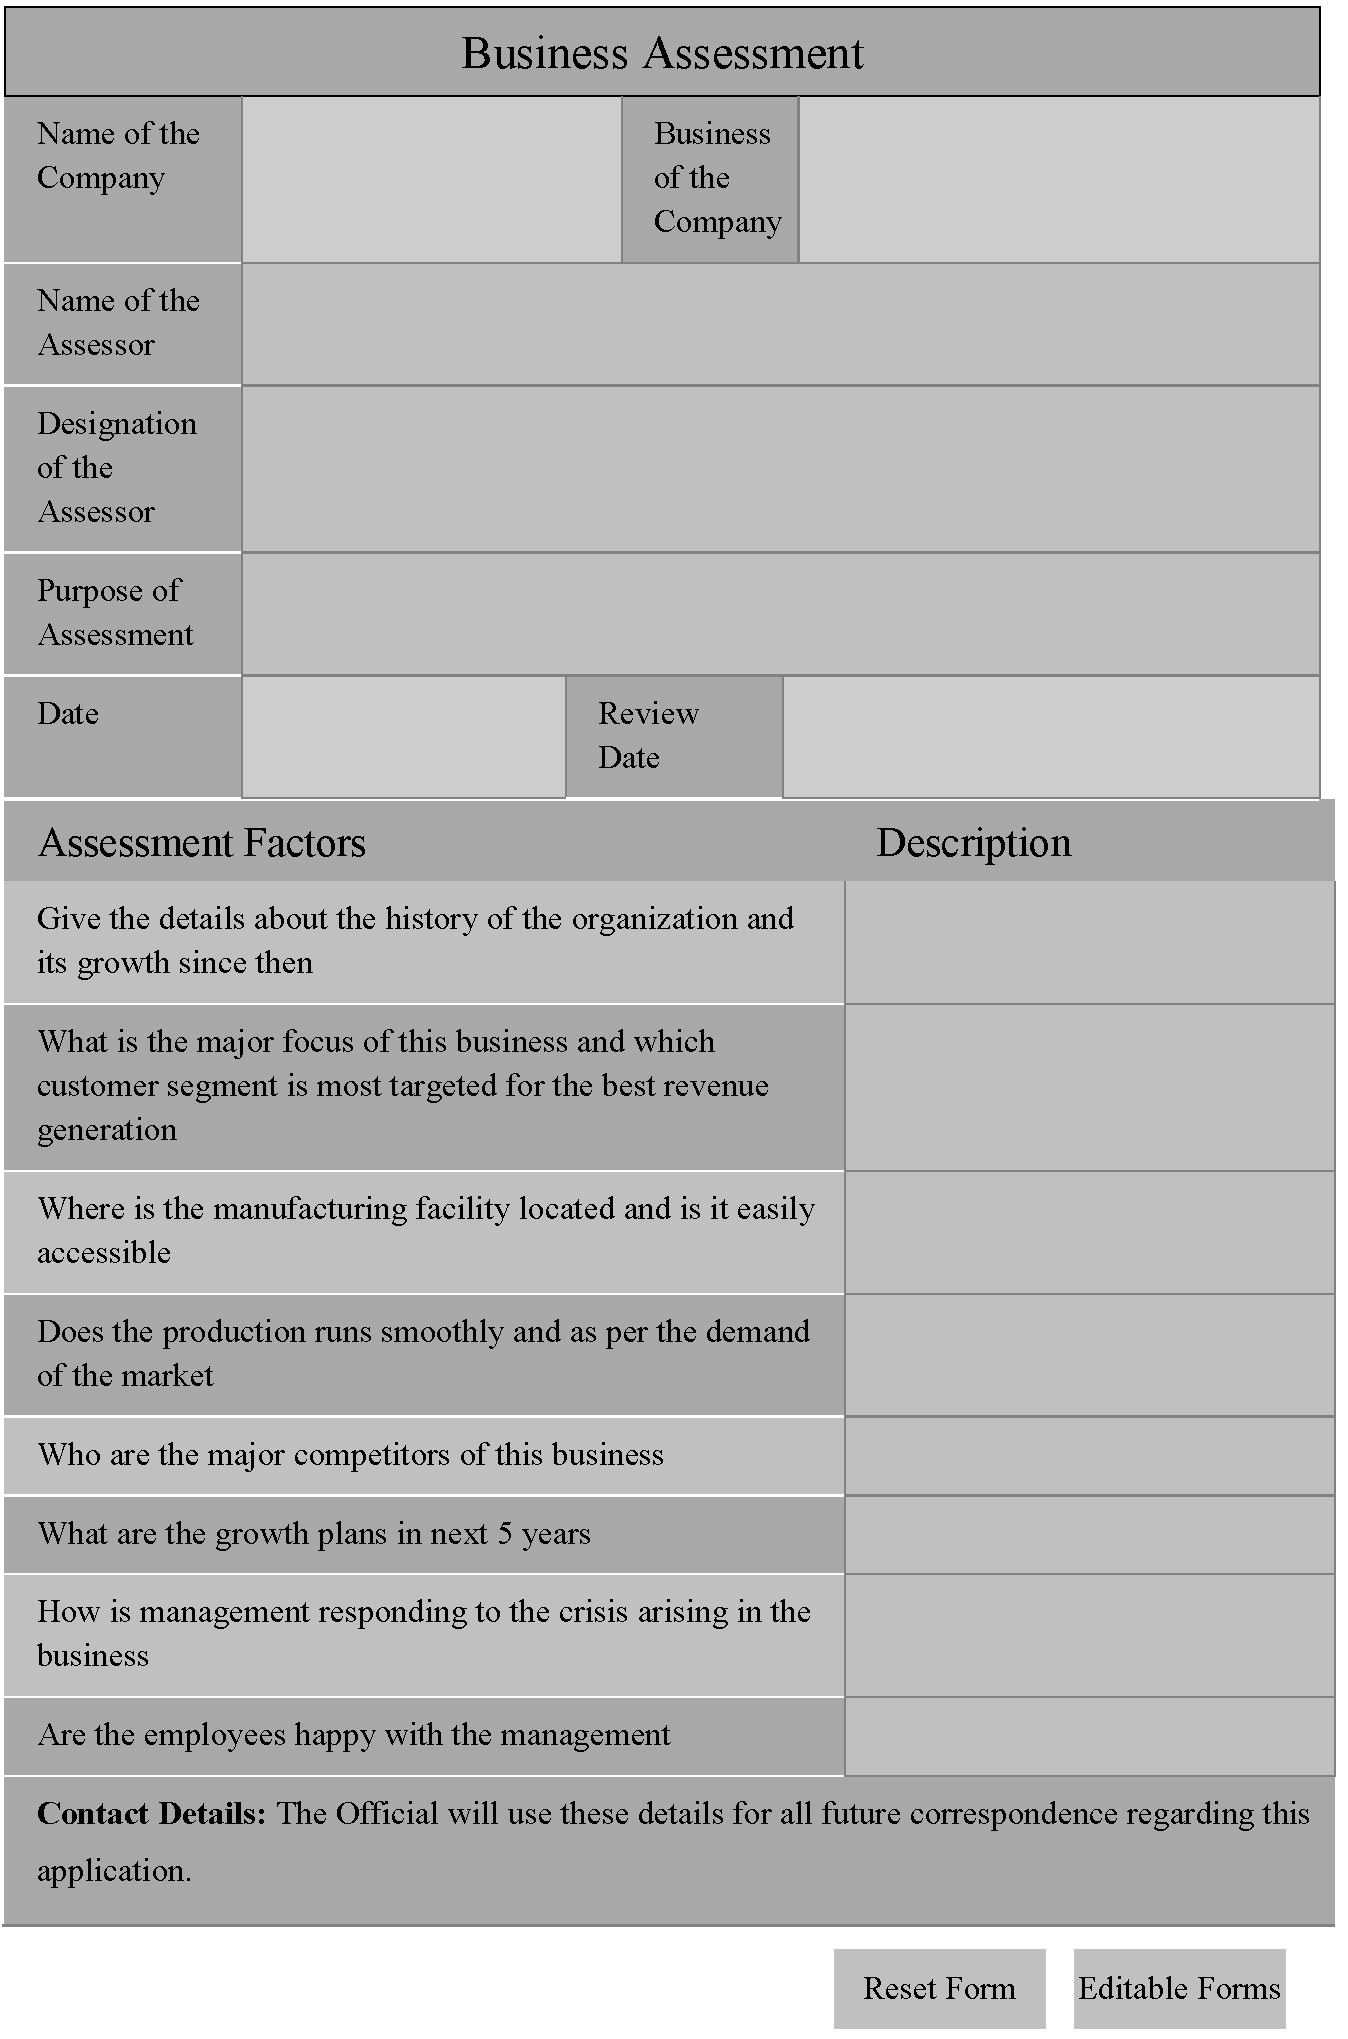 Business Assessment Form